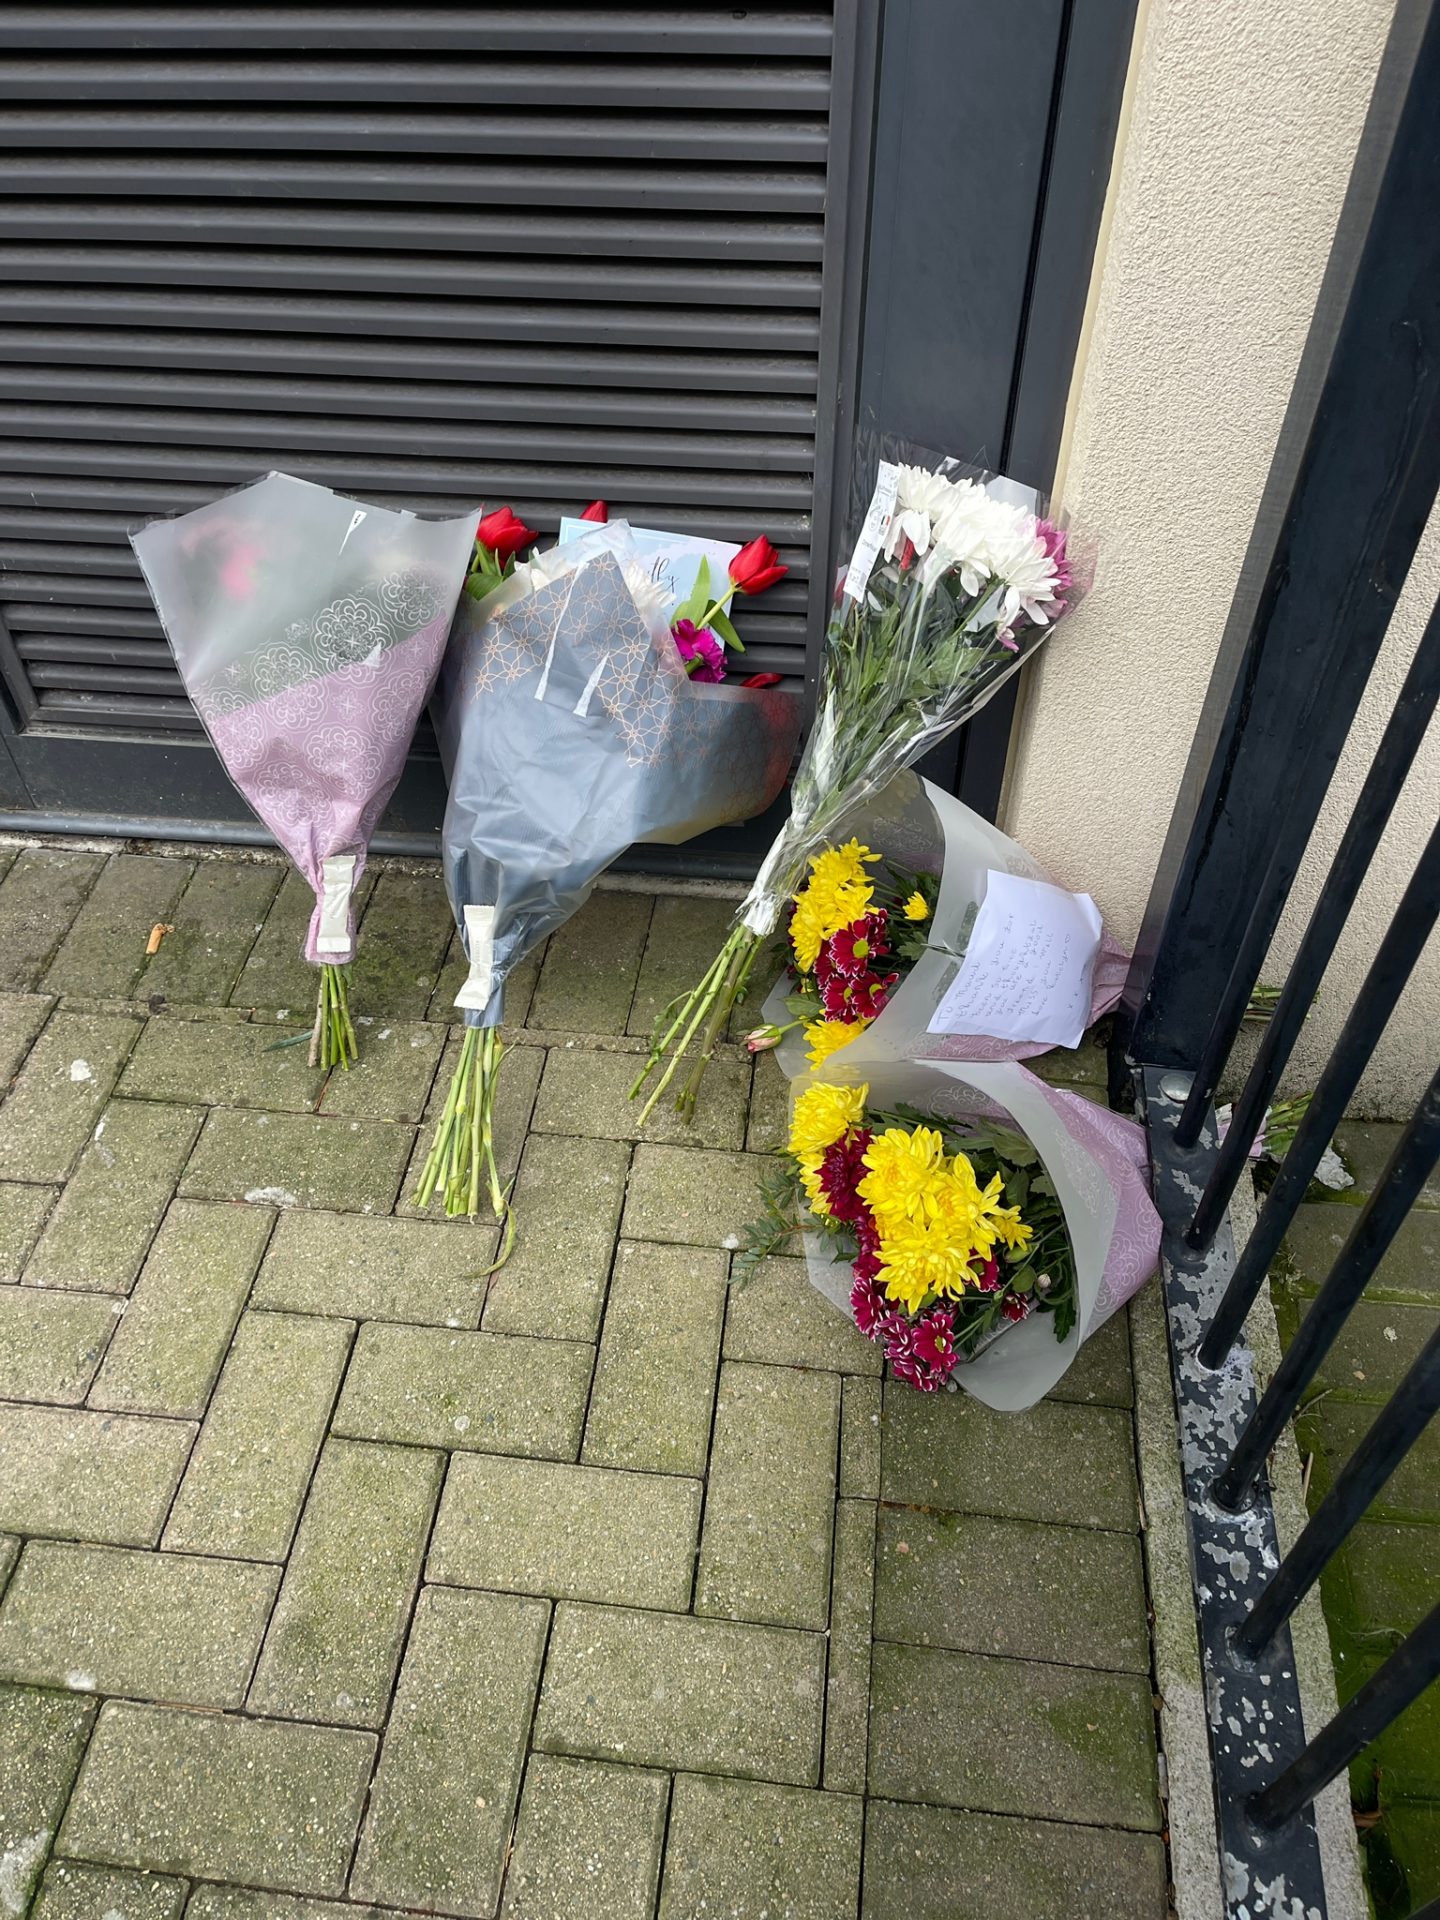 Flowers left at the scene at Royal Canal Park in Ashtown, Dublin, 13-01-2023. Image: Barry Whyte/Newstalk 